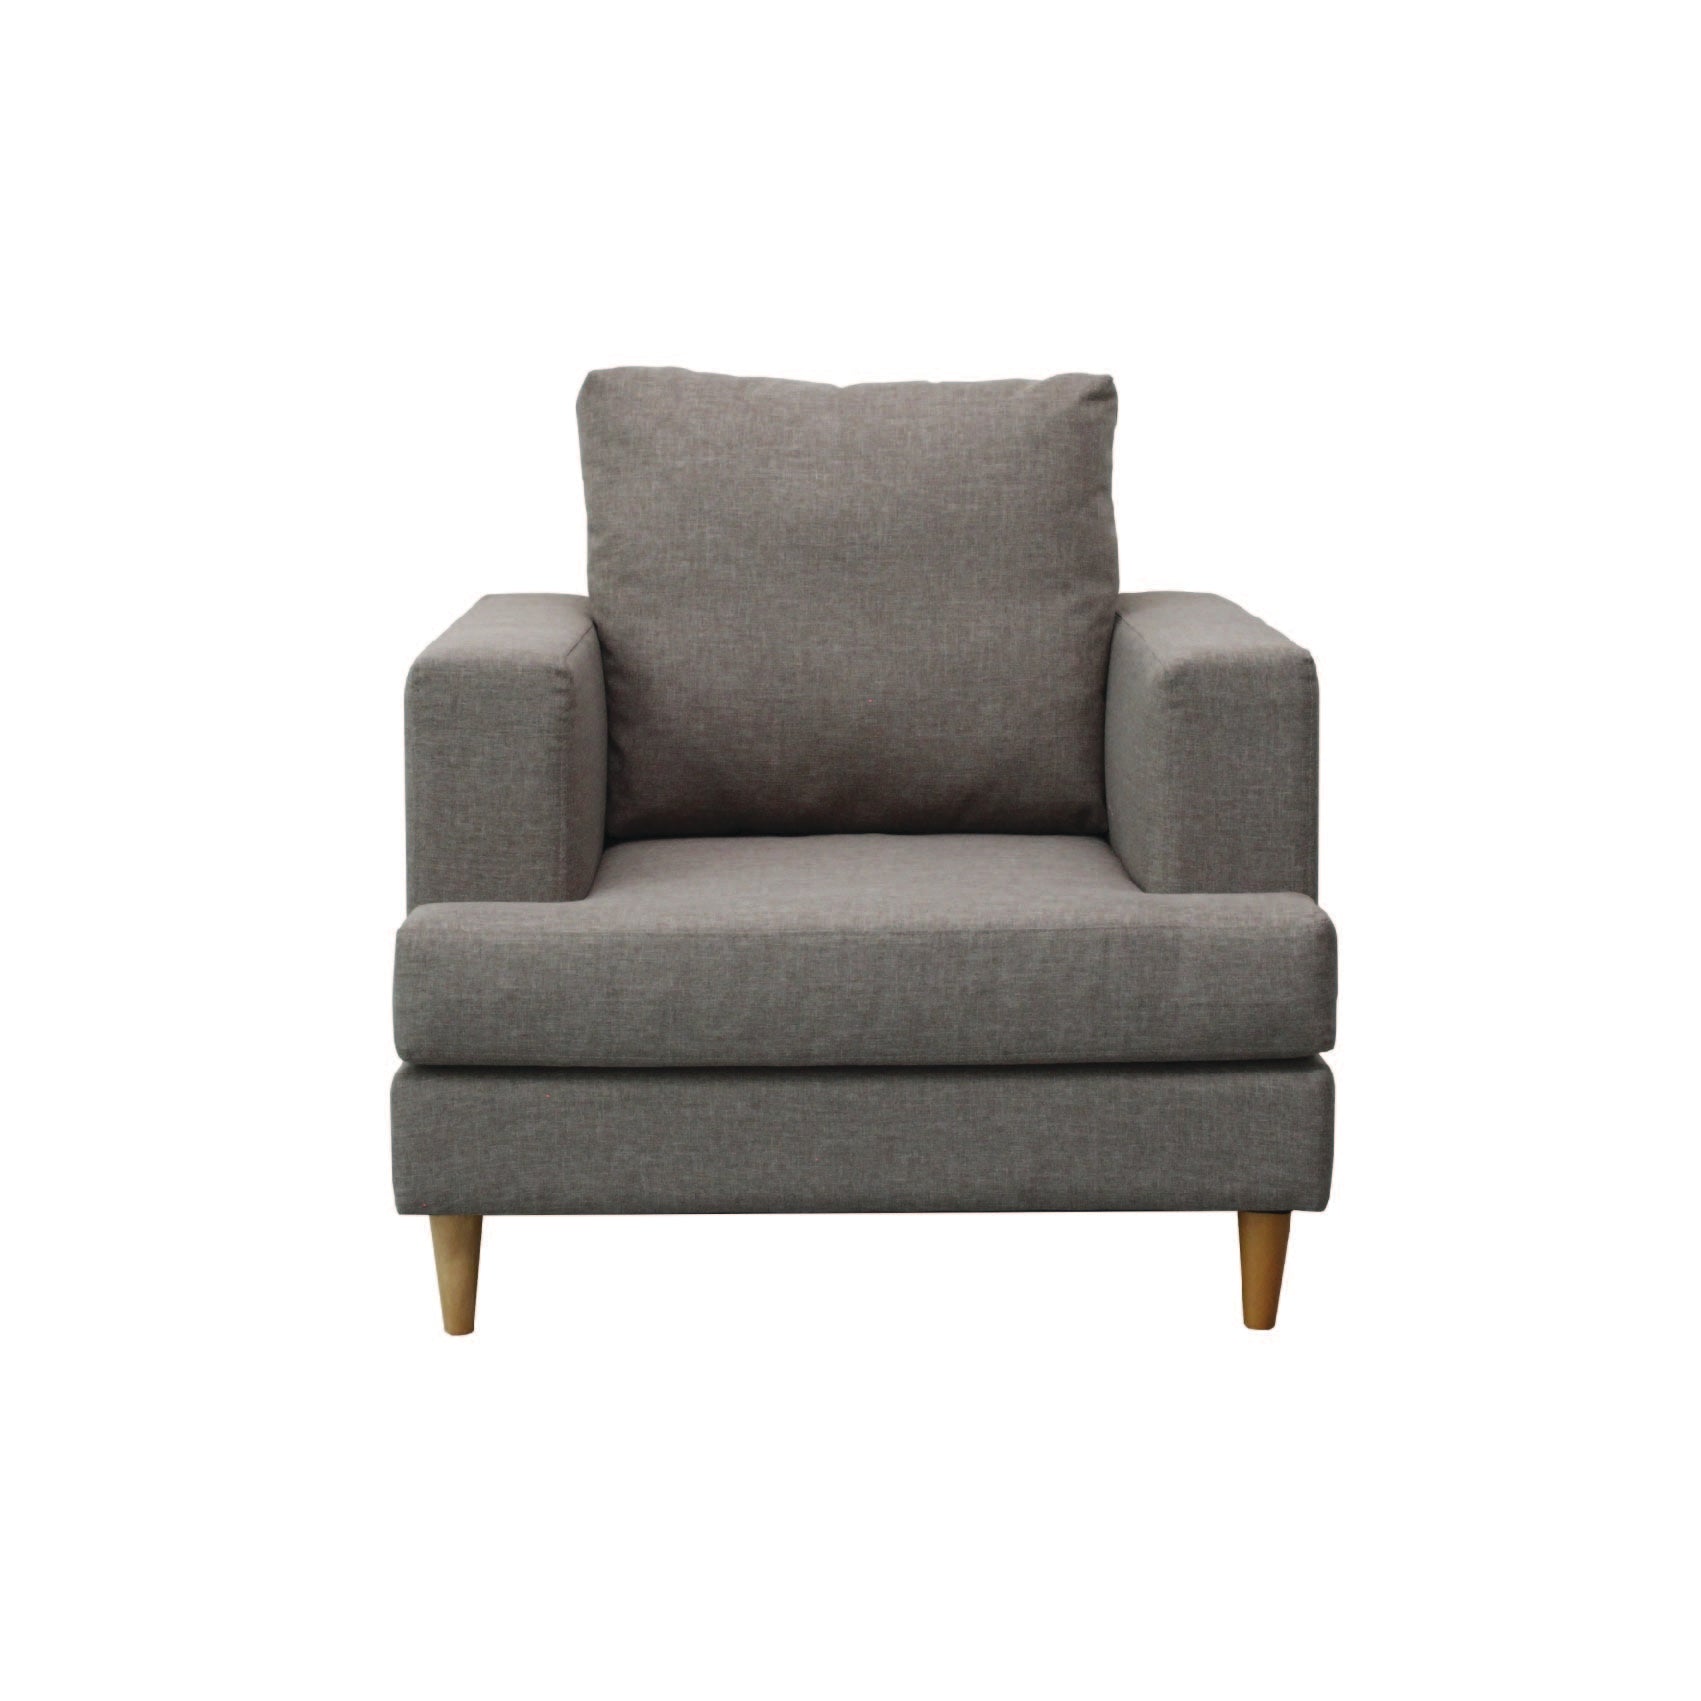 RANA Sofa 1 Seater in Grey Fabric